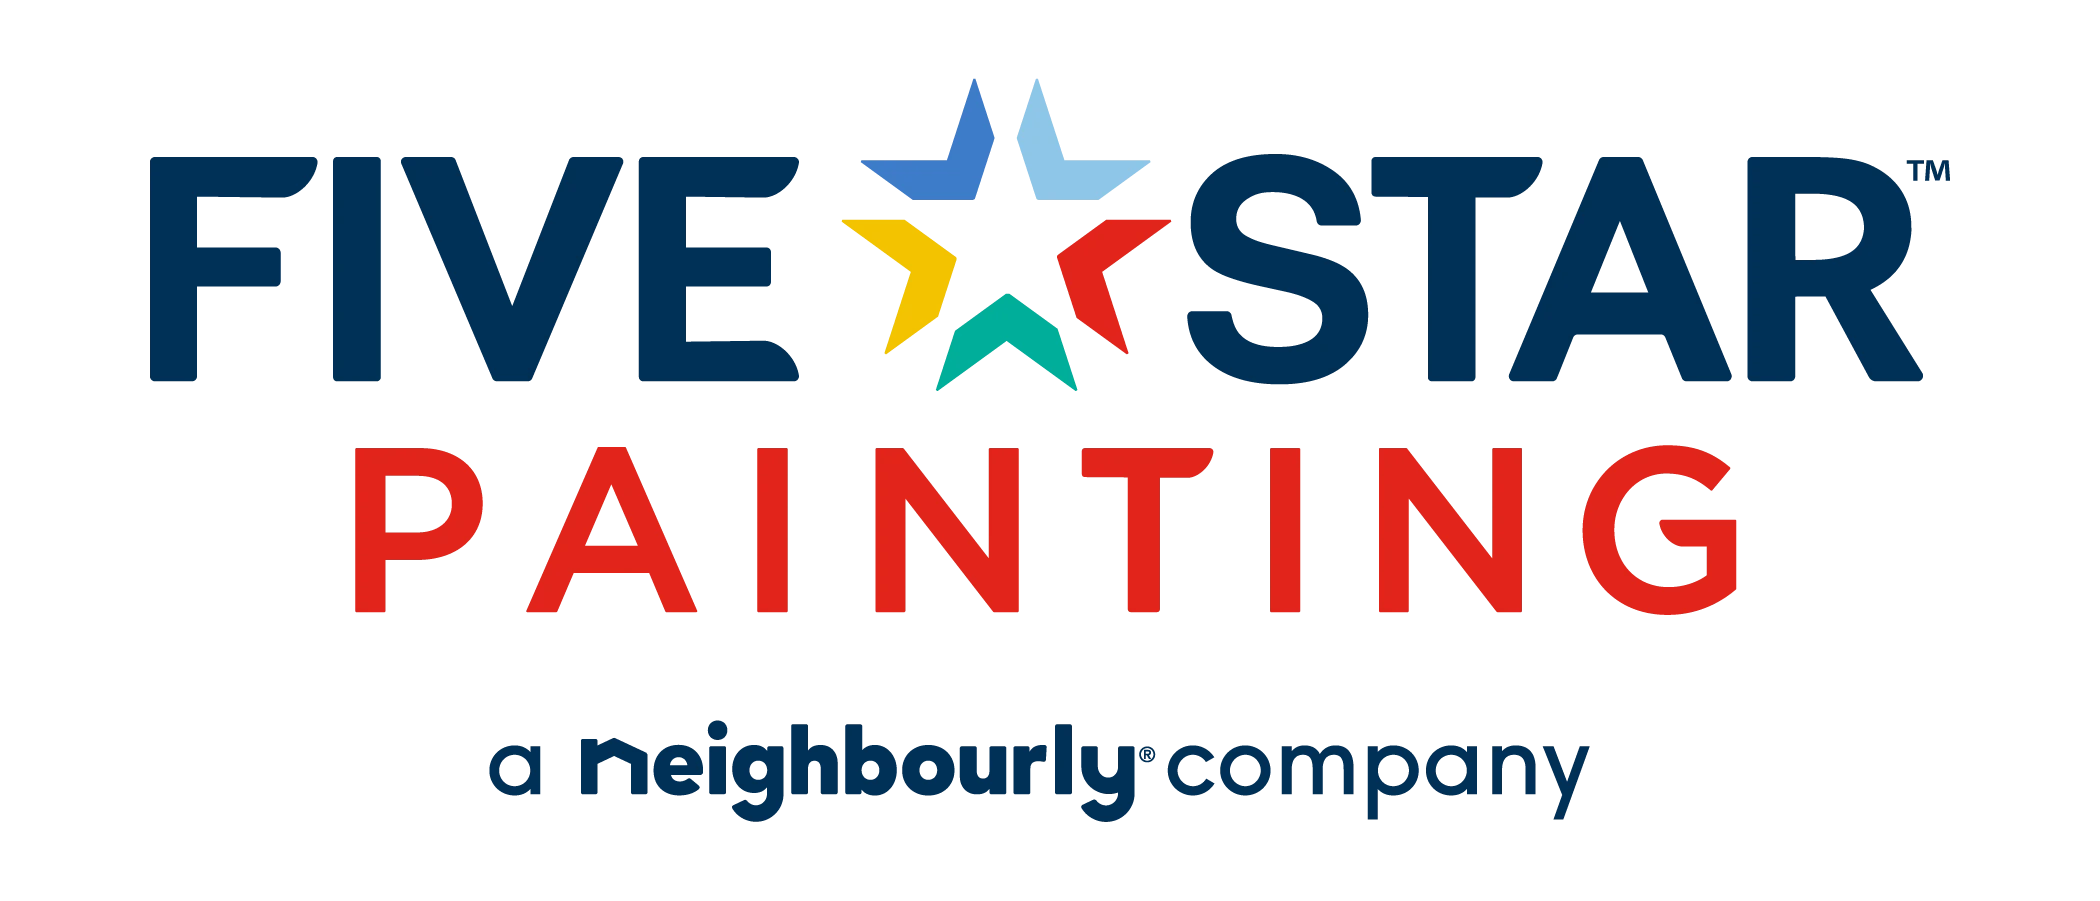 Five Star Painting brand logo.